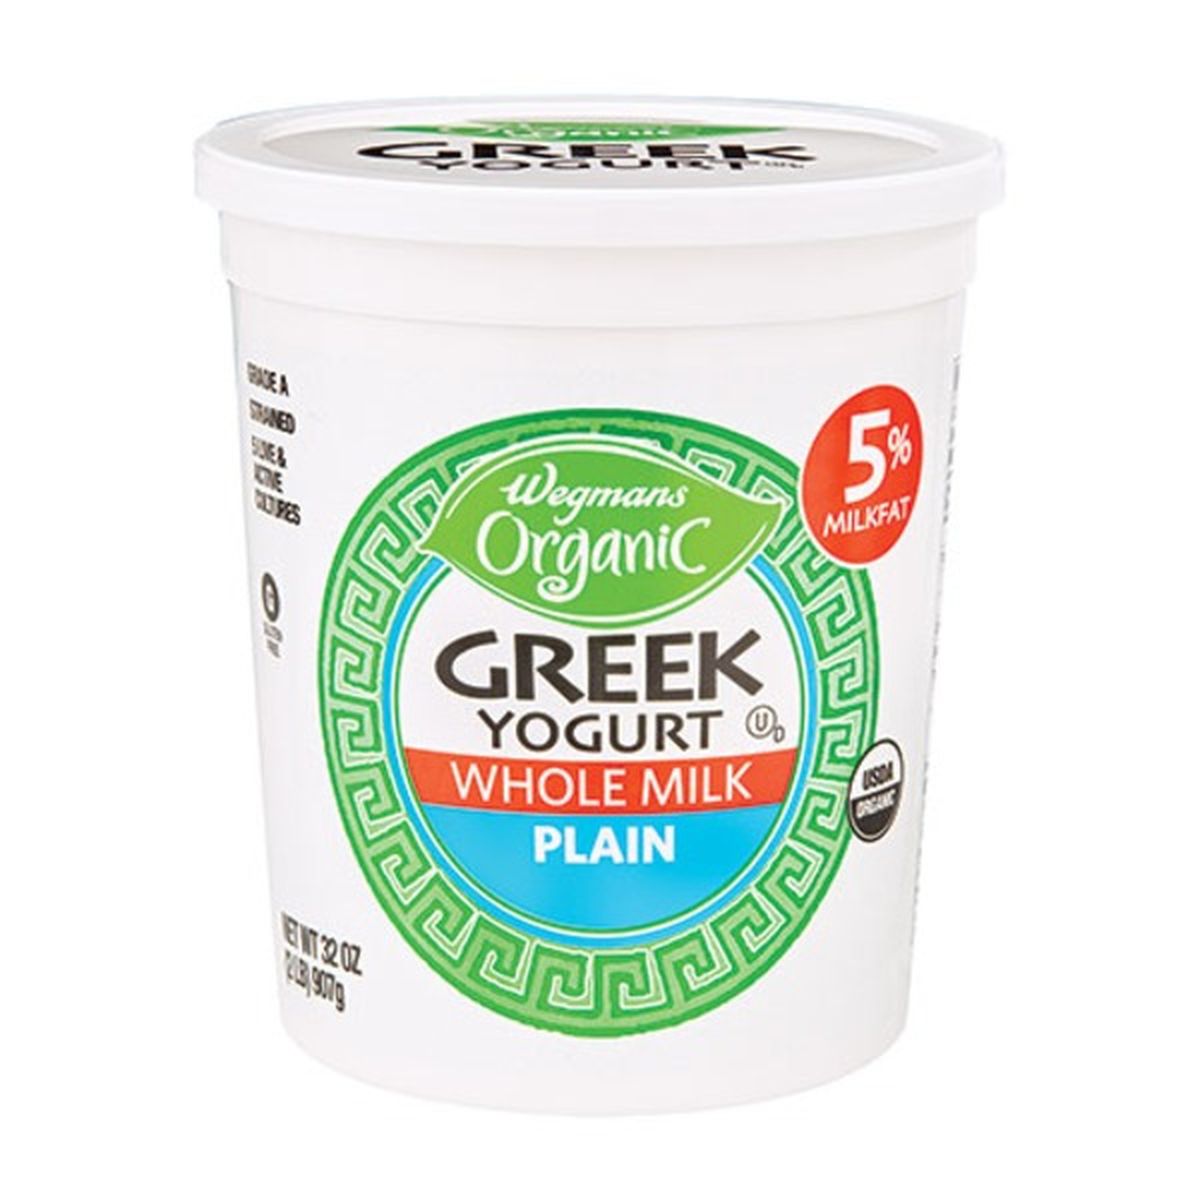 Calories in Wegmans Organic Greek Plain 5% Whole Milk Yogurt